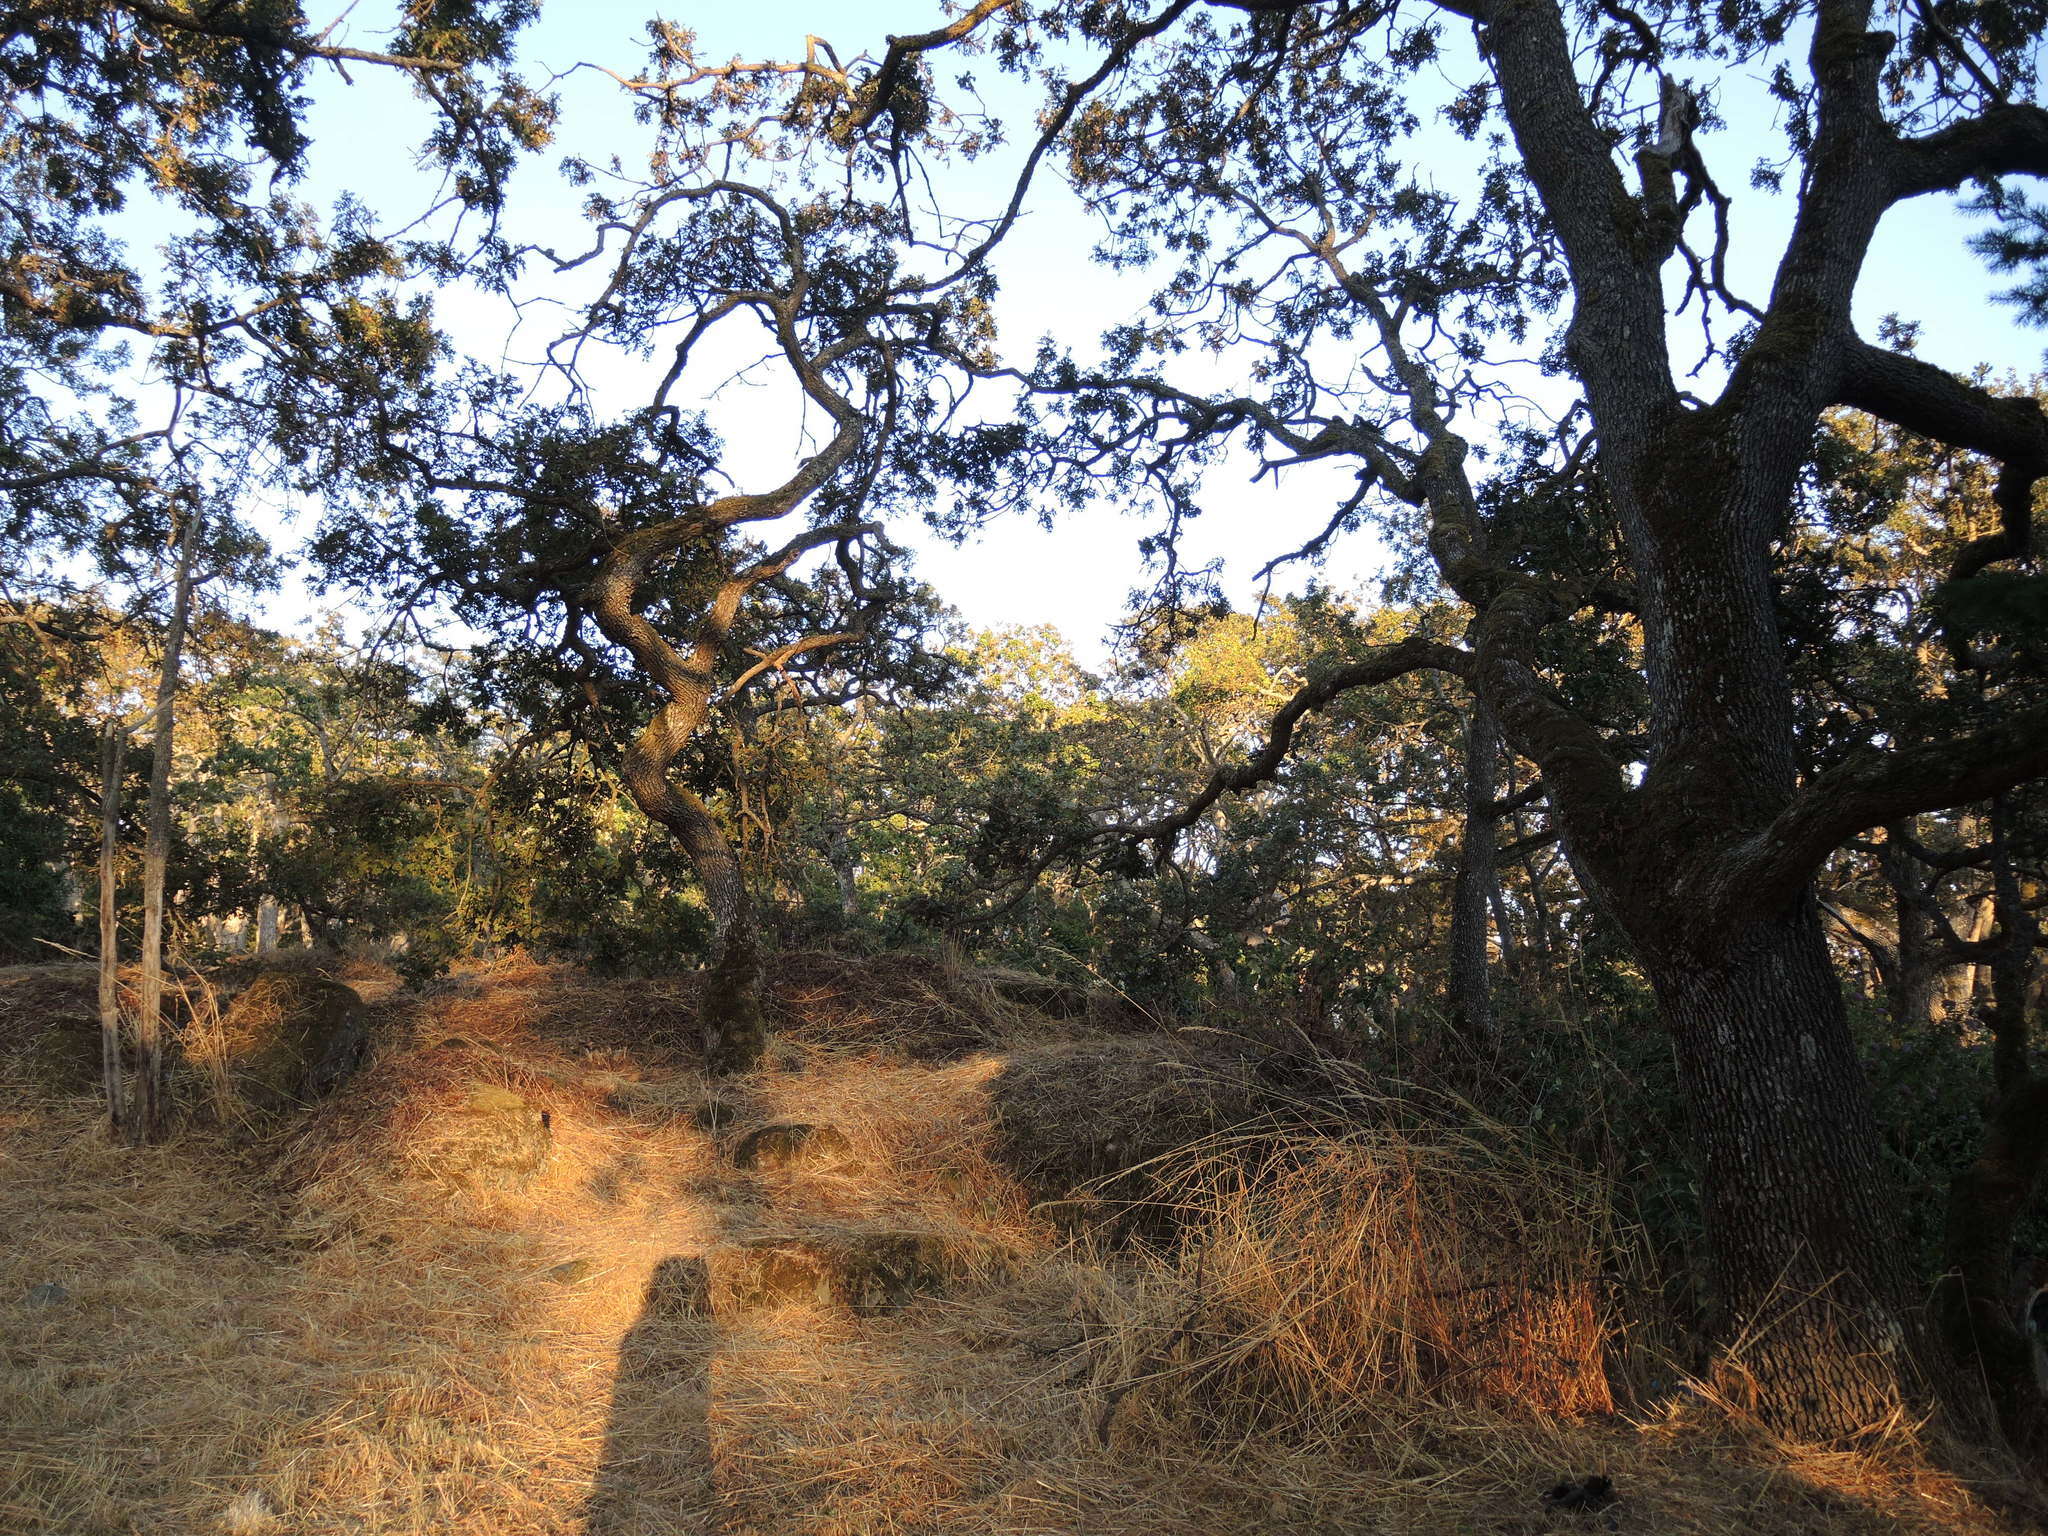 Image of Oregon white oak